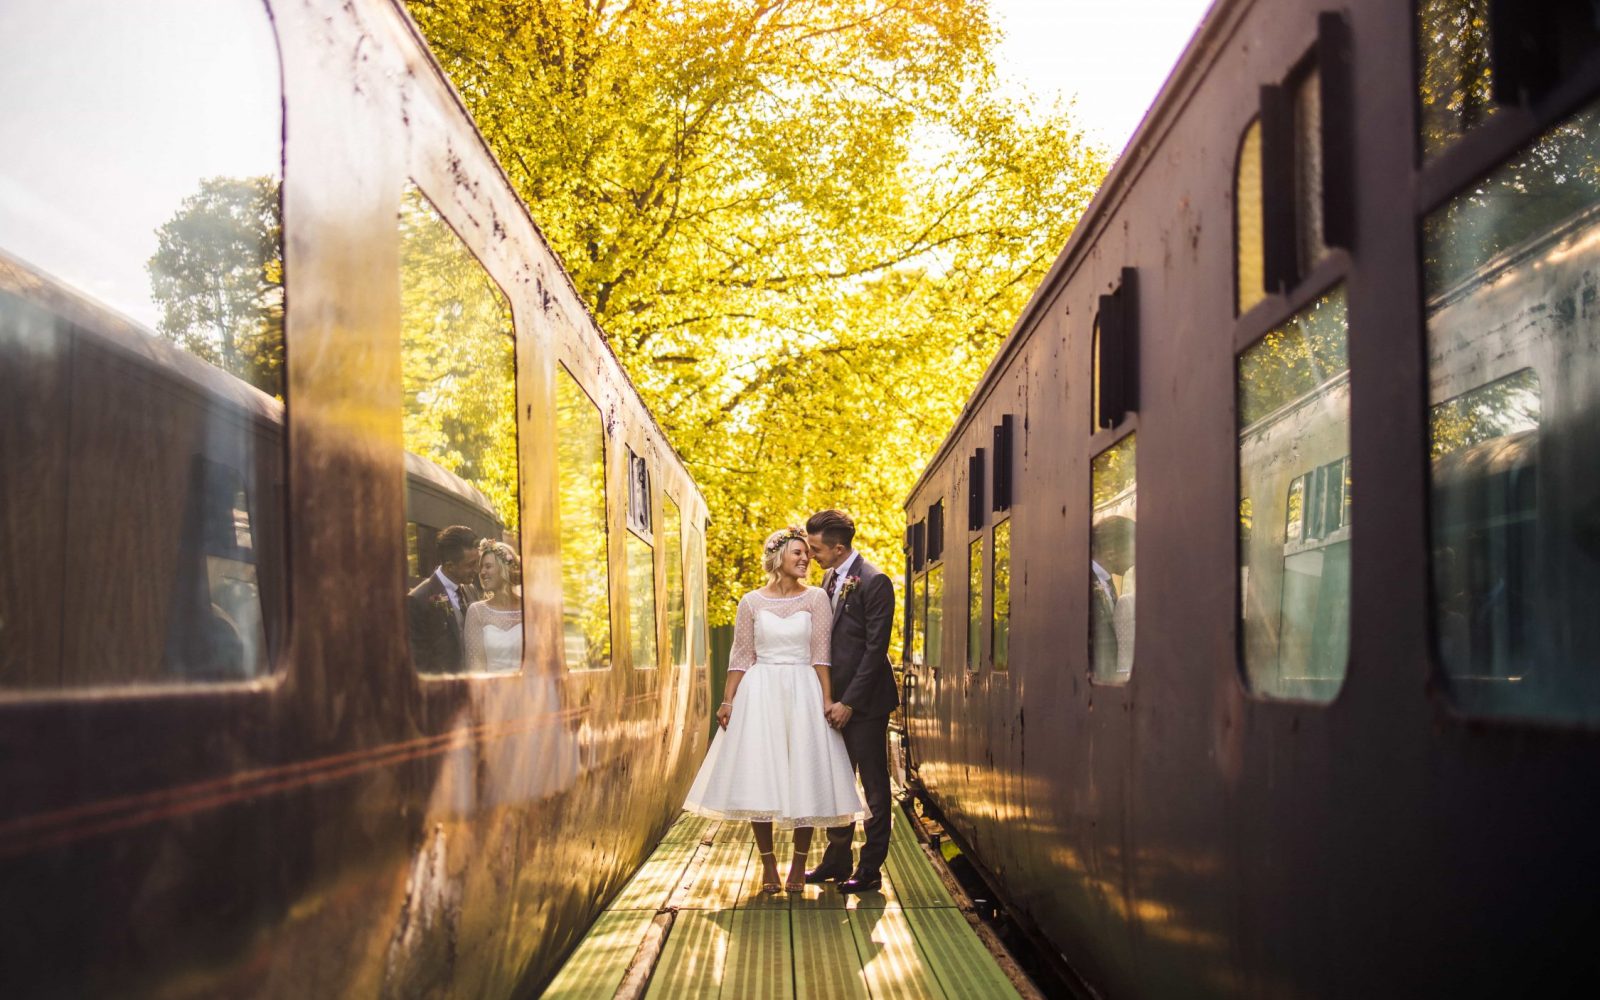 Joe and Katie - newly-weds at Fawley Hill Somersham Station, NavyBlur 2019